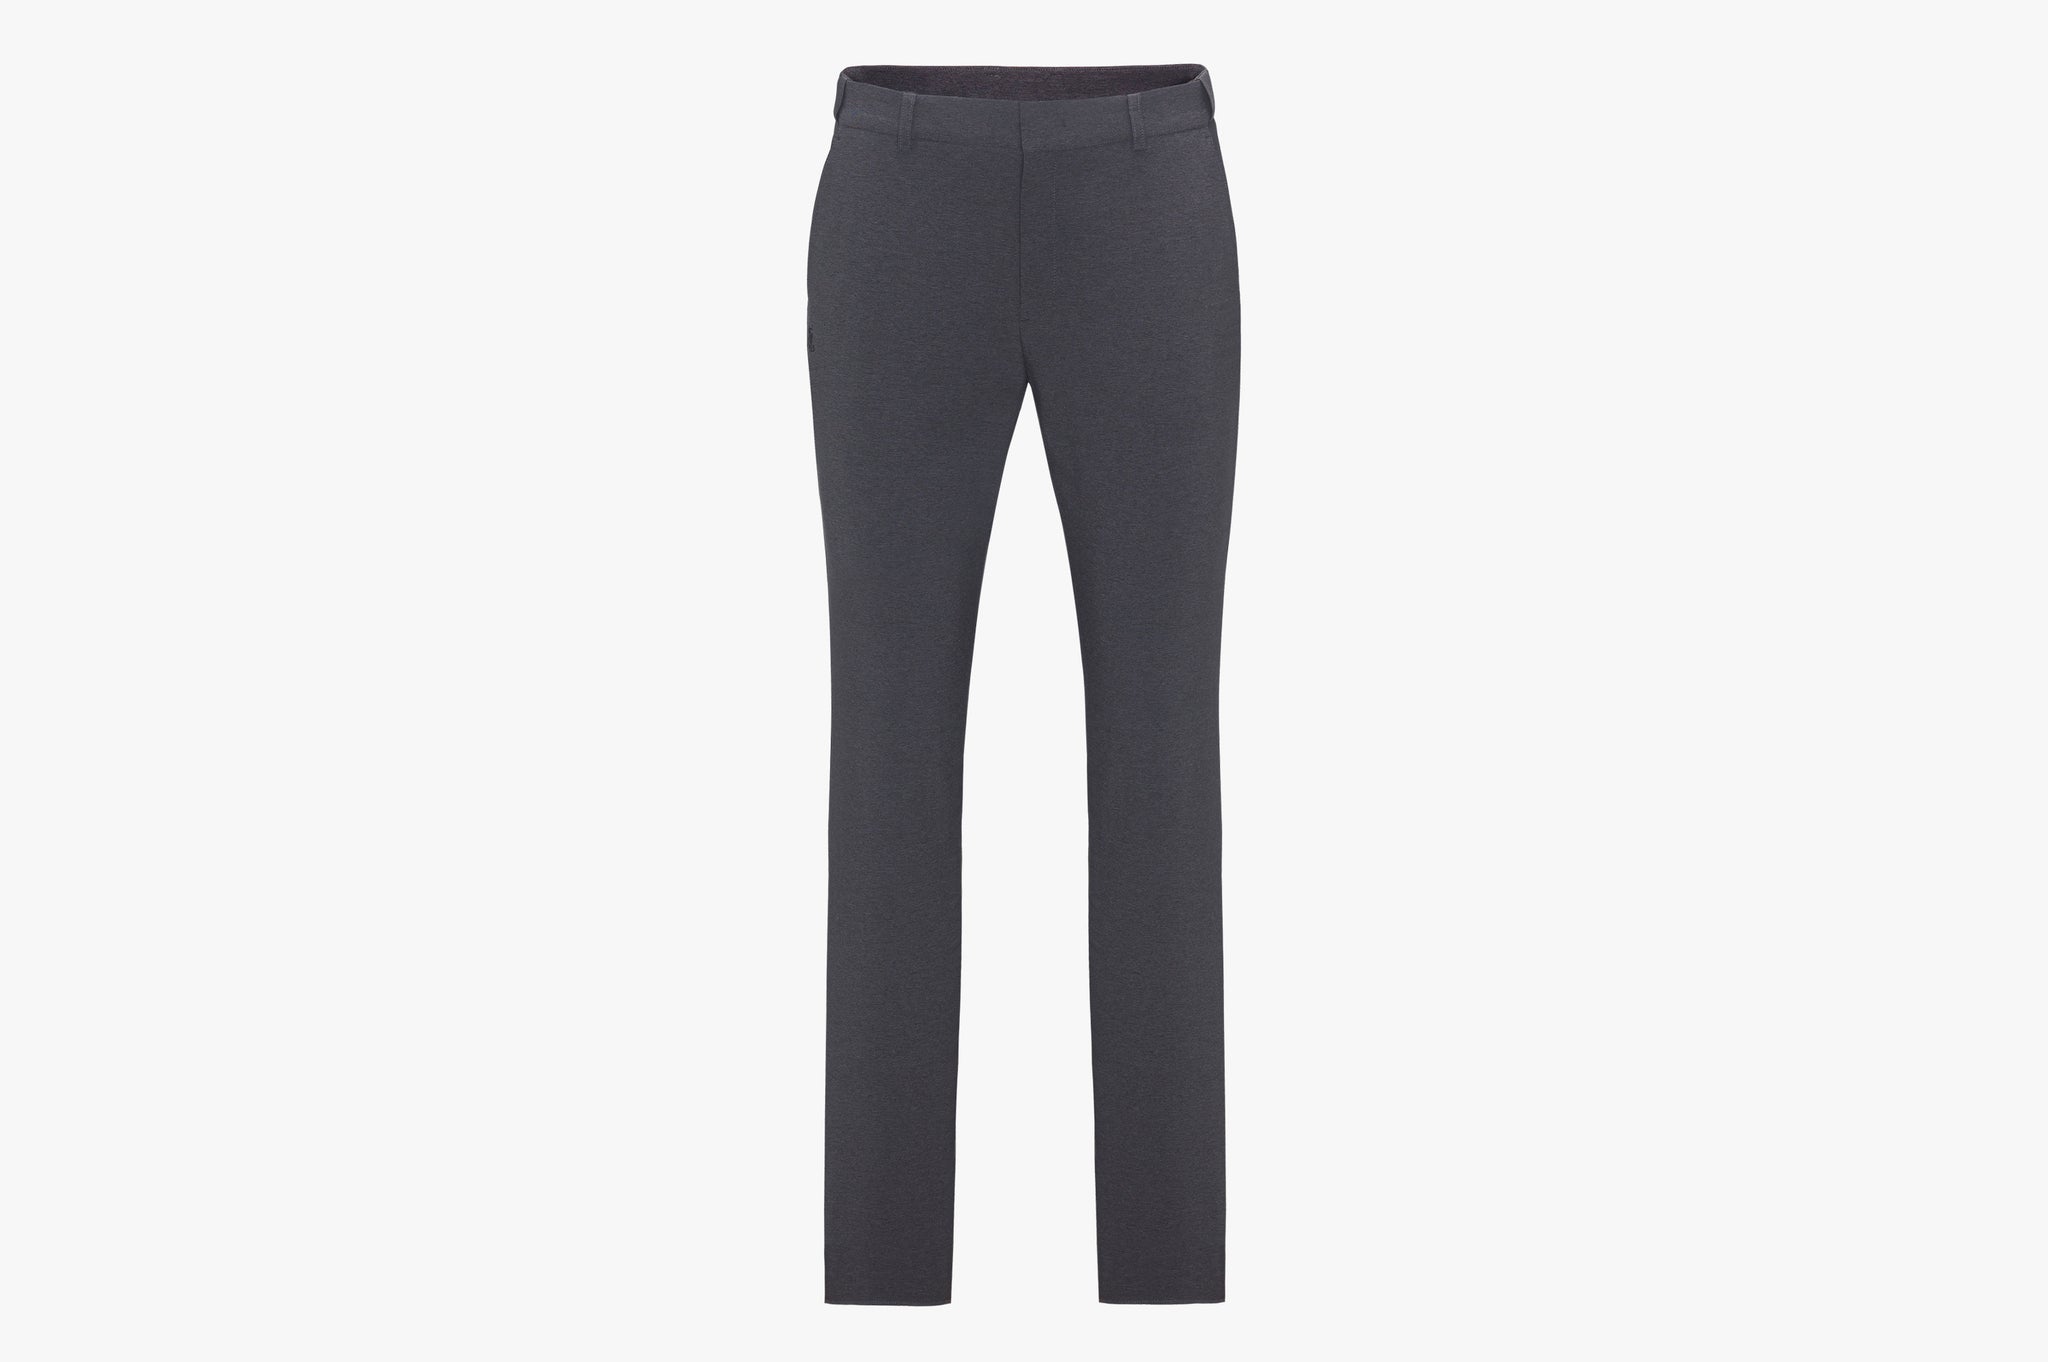 MEN'S Basic Bonding Pants (Grey)